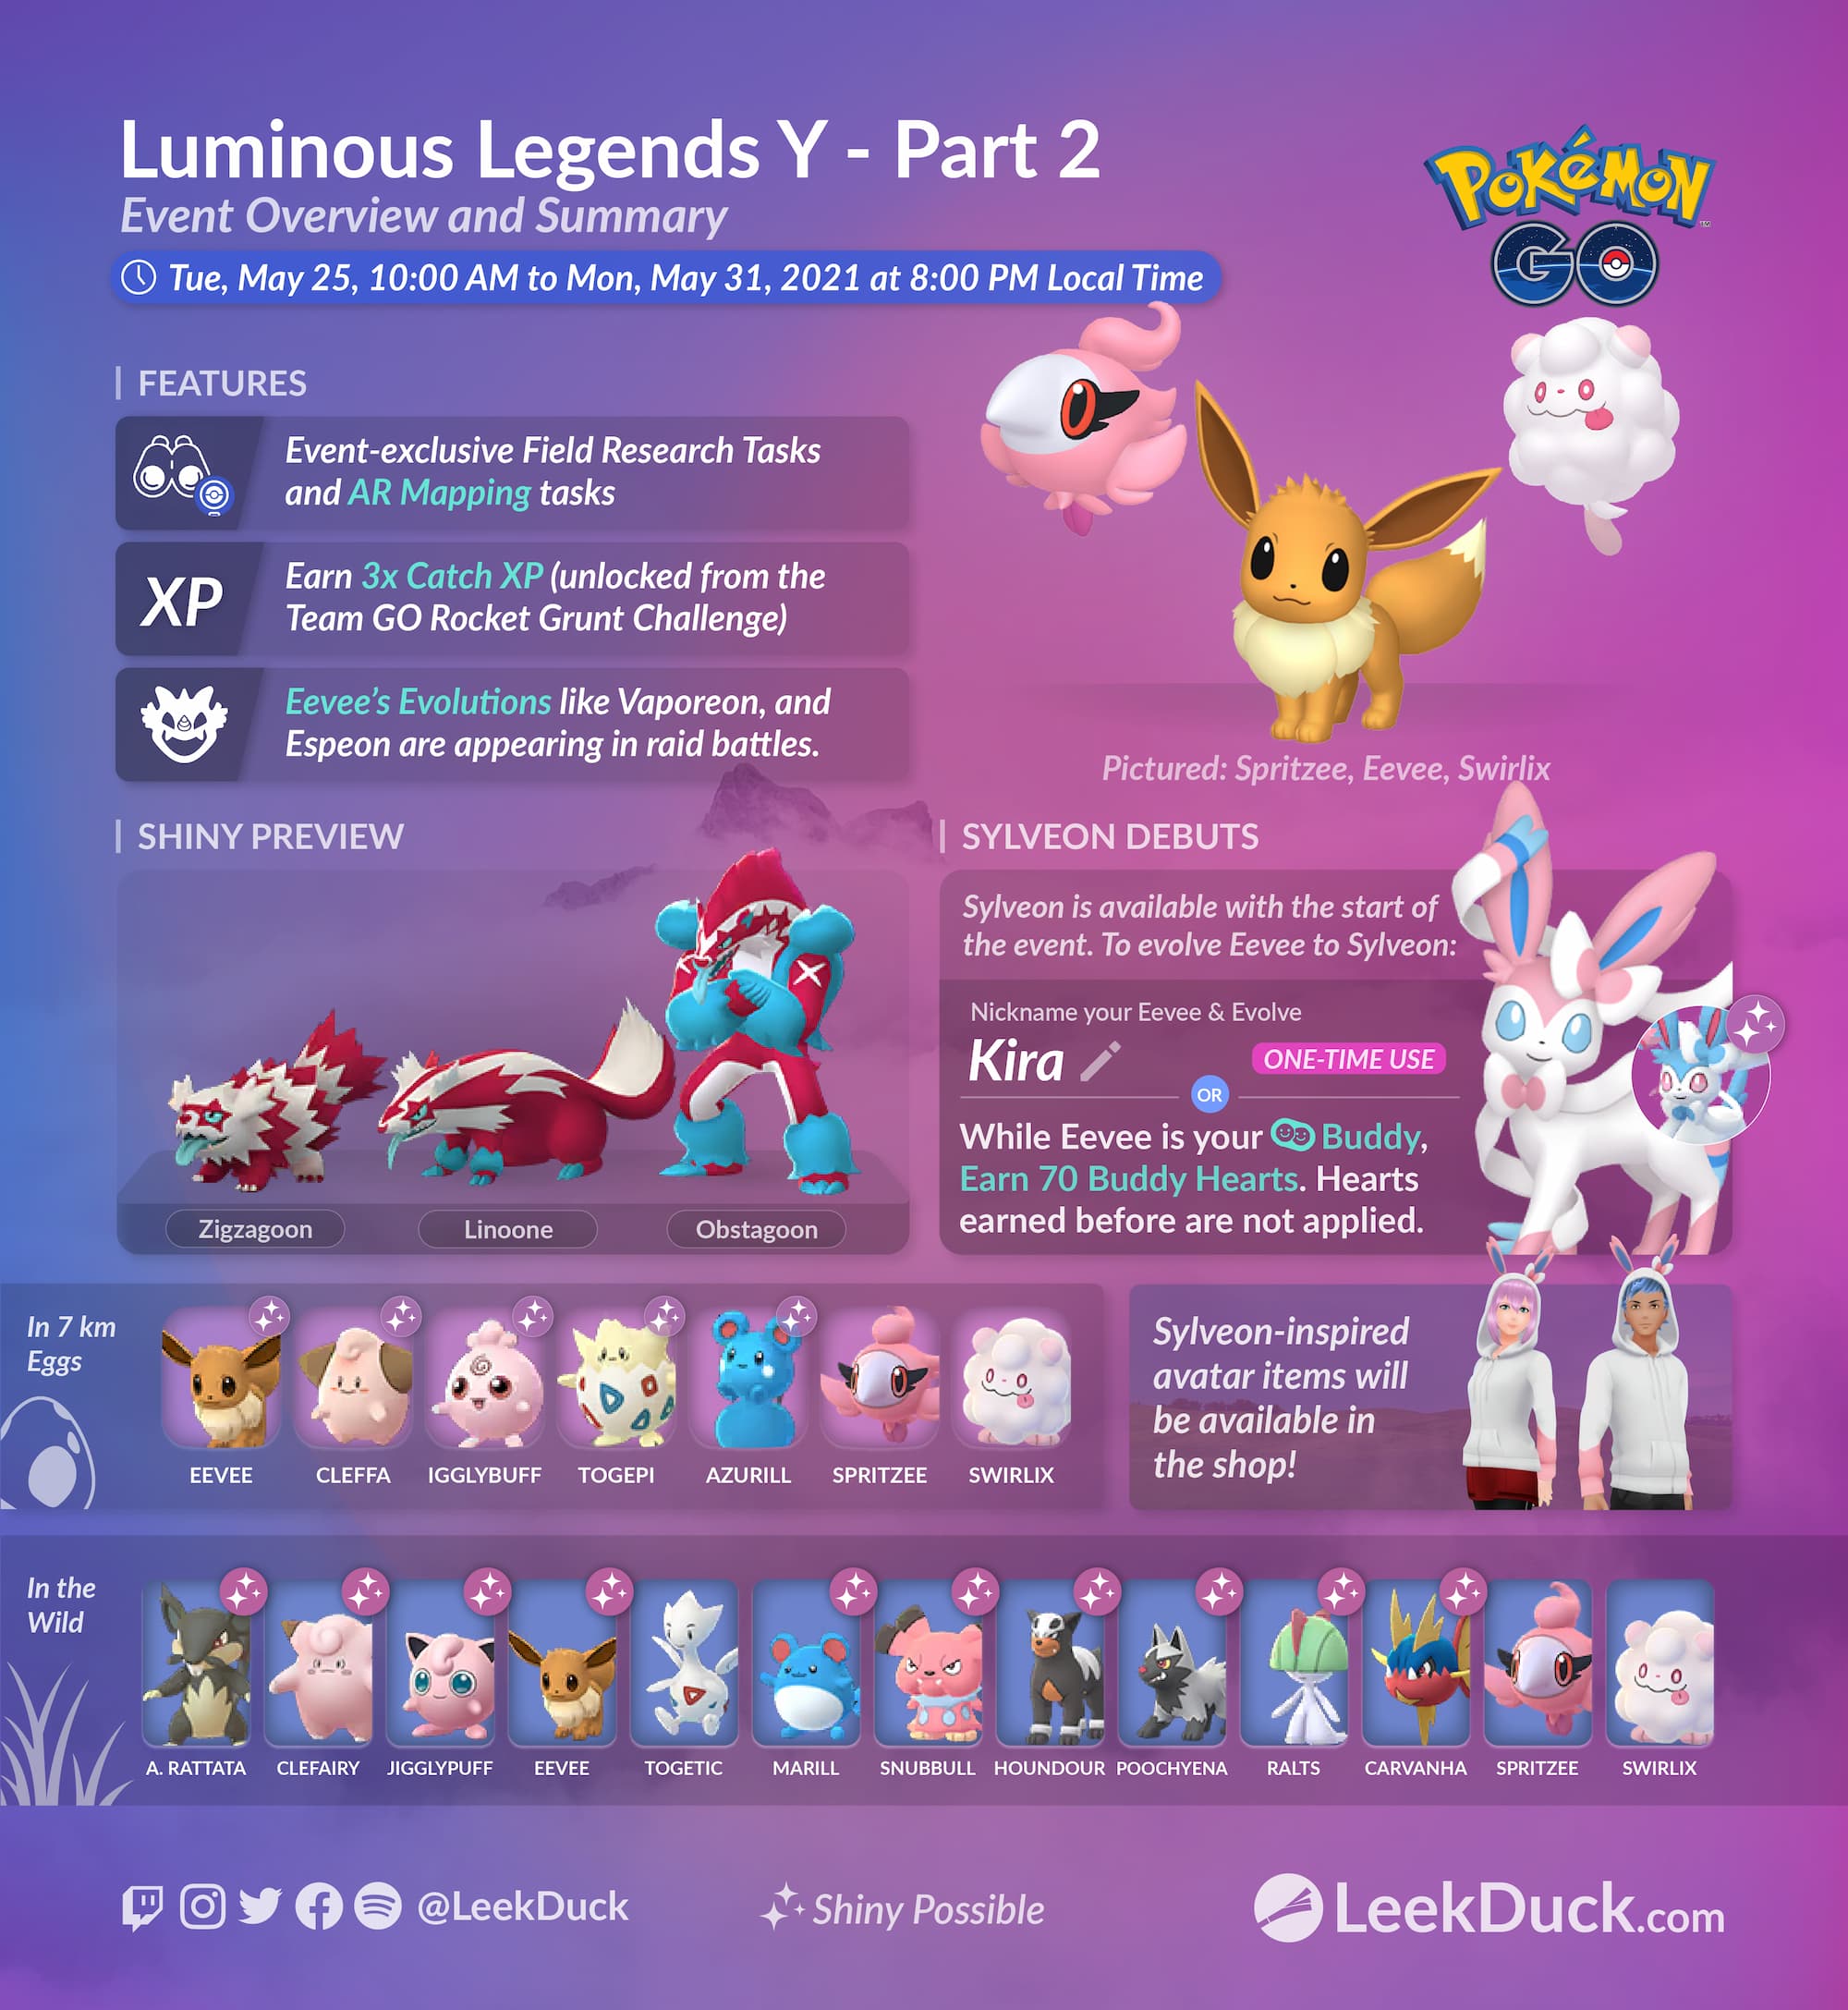 Luminous Legends Y Part 2 Leek Duck Pokemon Go News And Resources